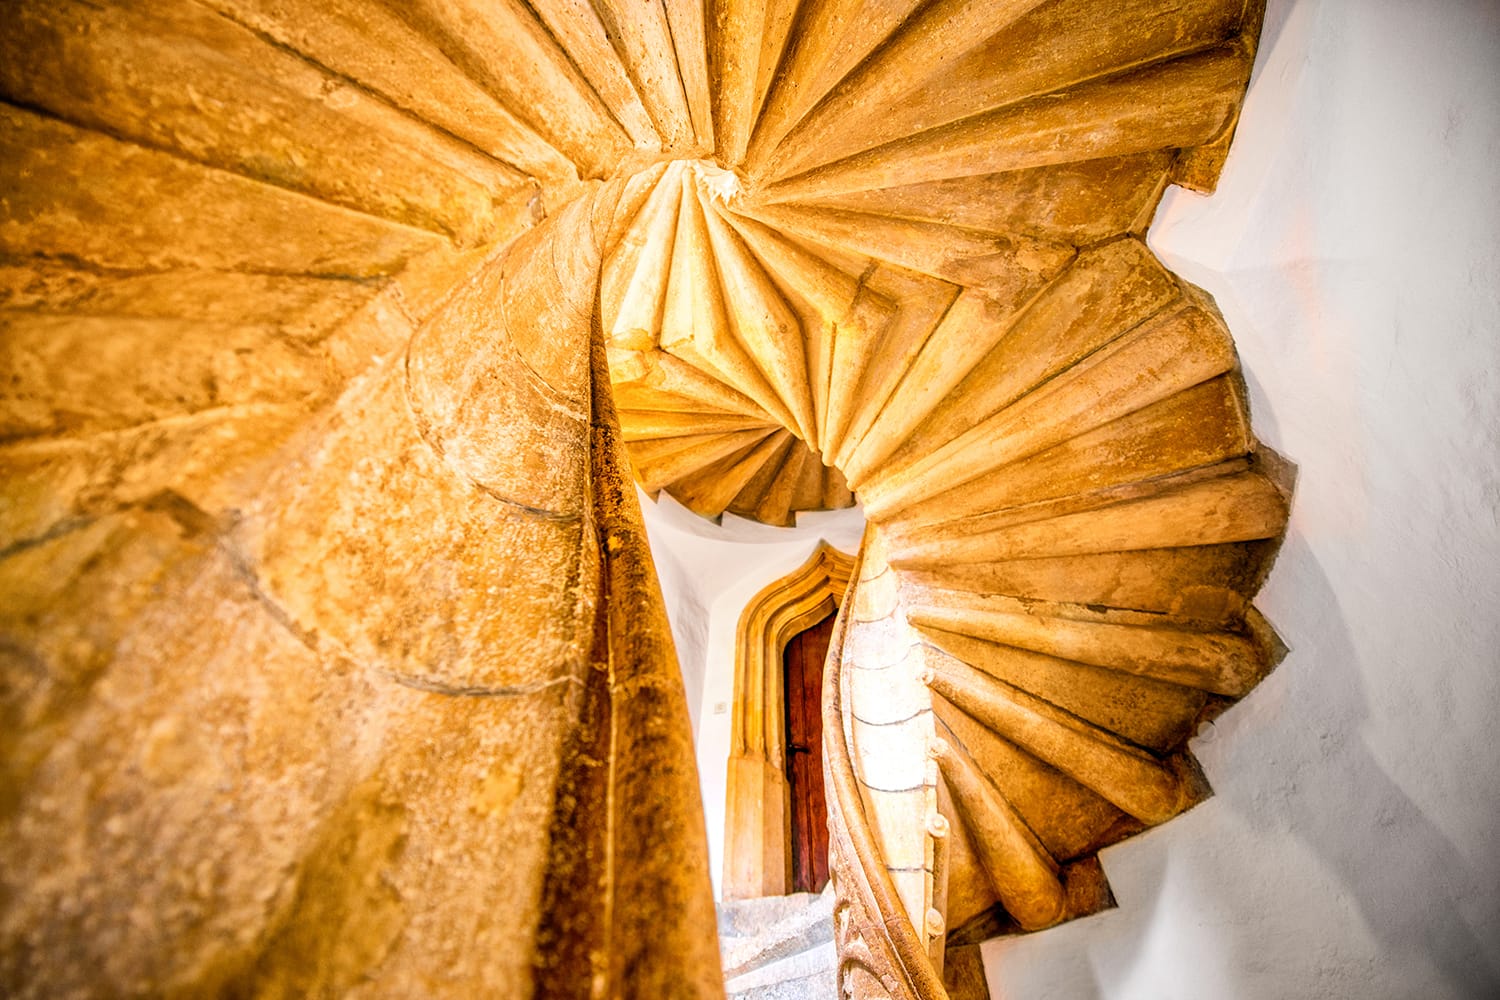 Double spiral gothic staircase inside the Burg in Graz, Austria.